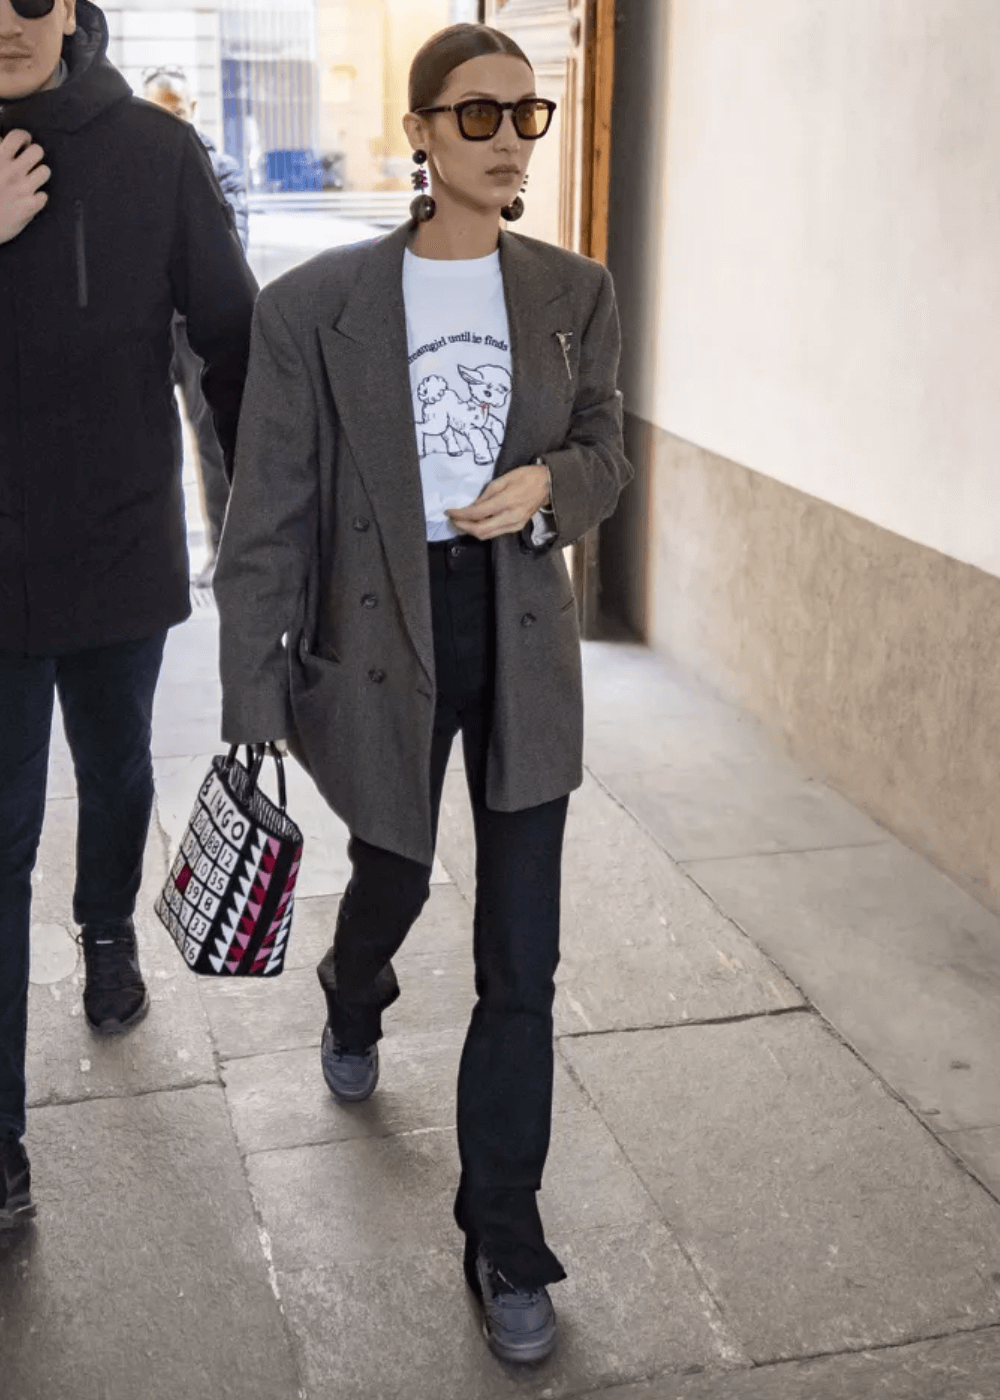 Bella Hadid - calça jeans, t-shirt estampada, blazer oversized e tênis preto - Bella Hadid - outono - modelo andando na rua usando óculos de sol - https://stealthelook.com.br